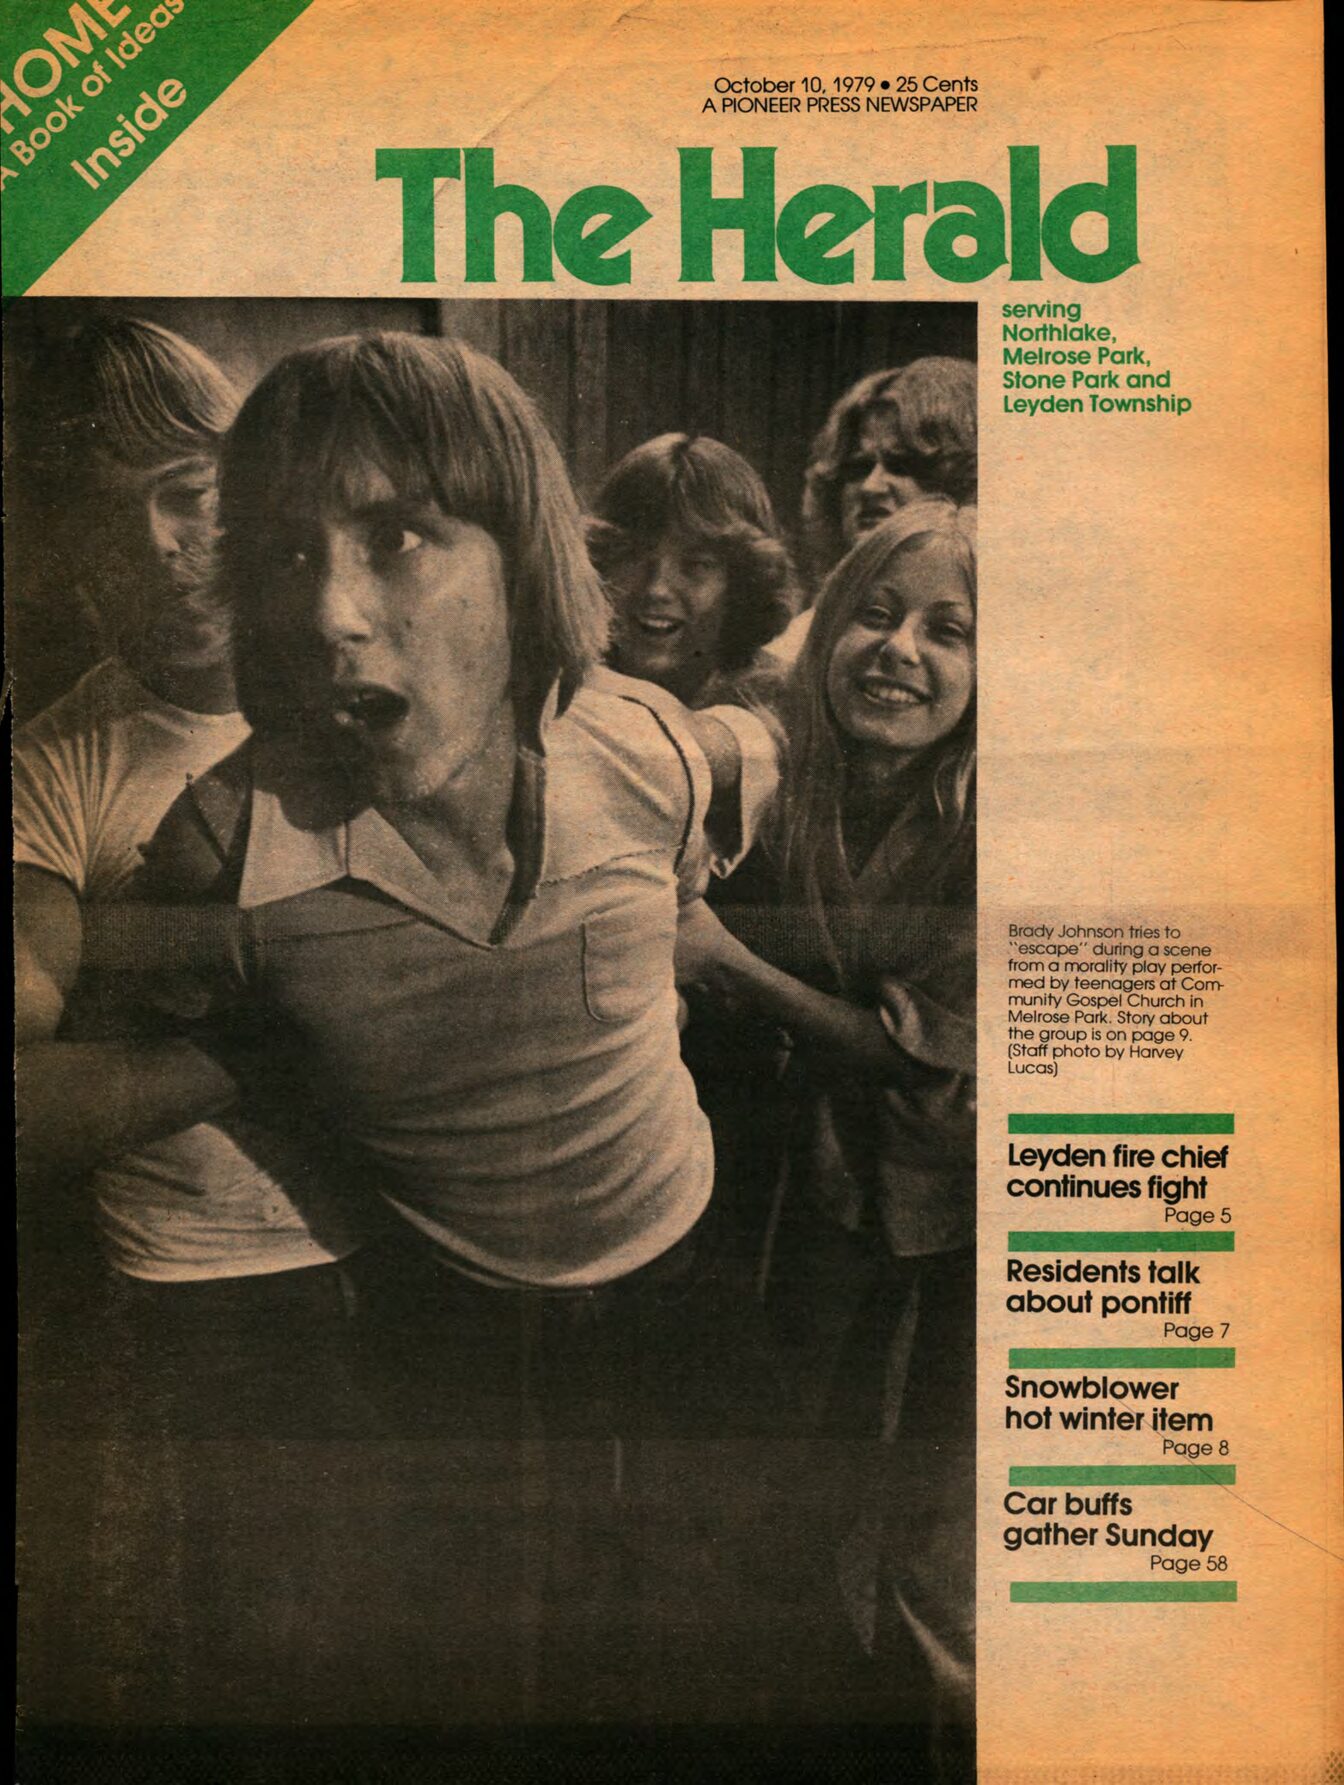 The Herald – 19791010